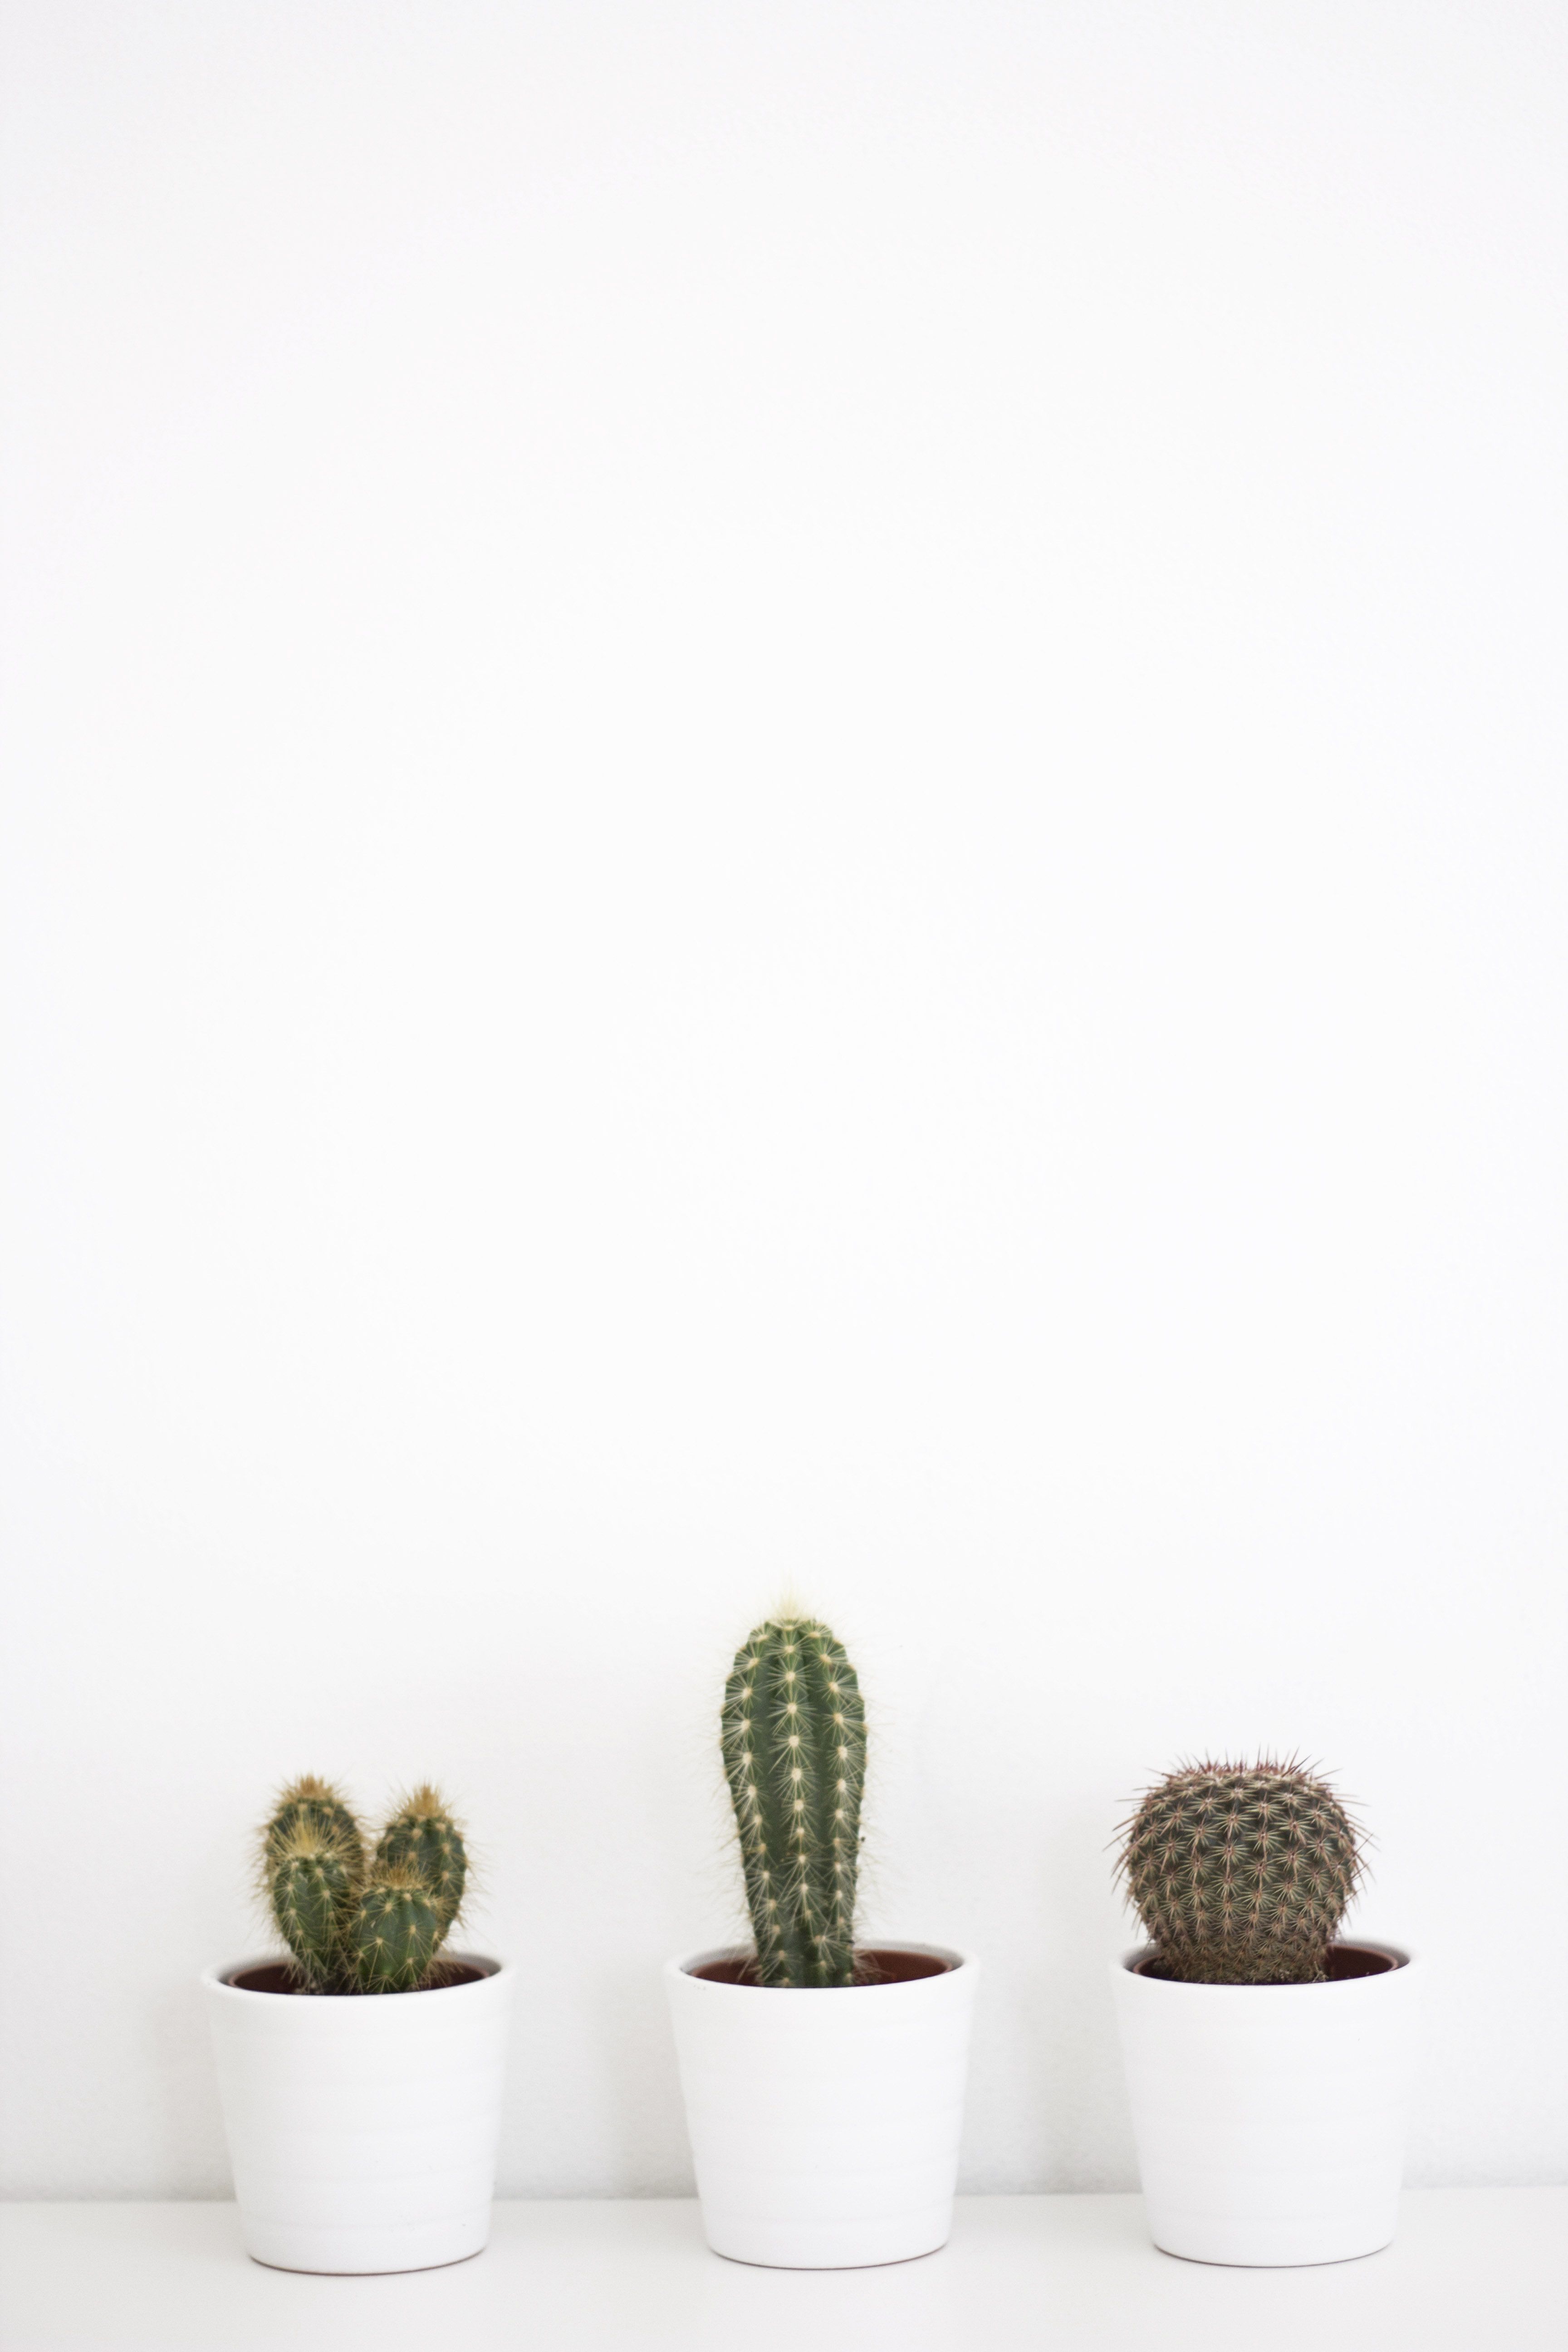  Kaktus Hintergrundbild 3456x5184. Aesthetic Cactus Wallpaper